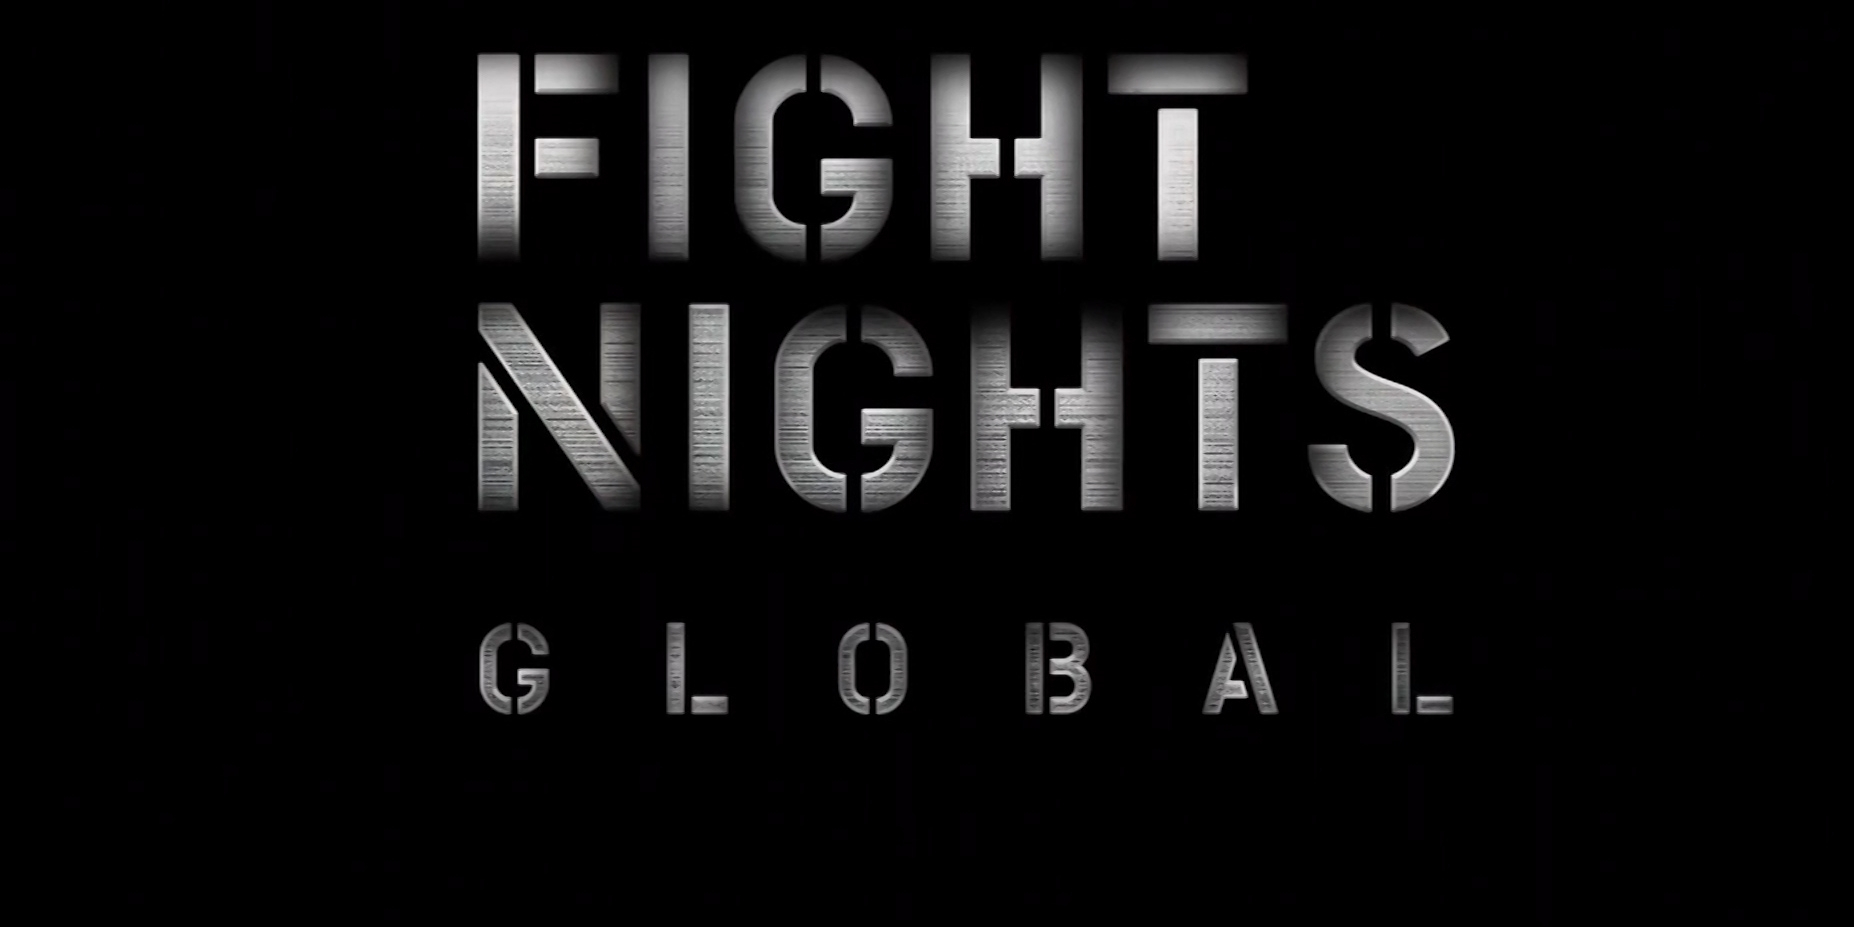 Fight Night эмблема. АМС файт Найт лого. Fight Nights Global logo. AMC Fight Nights Global logo.